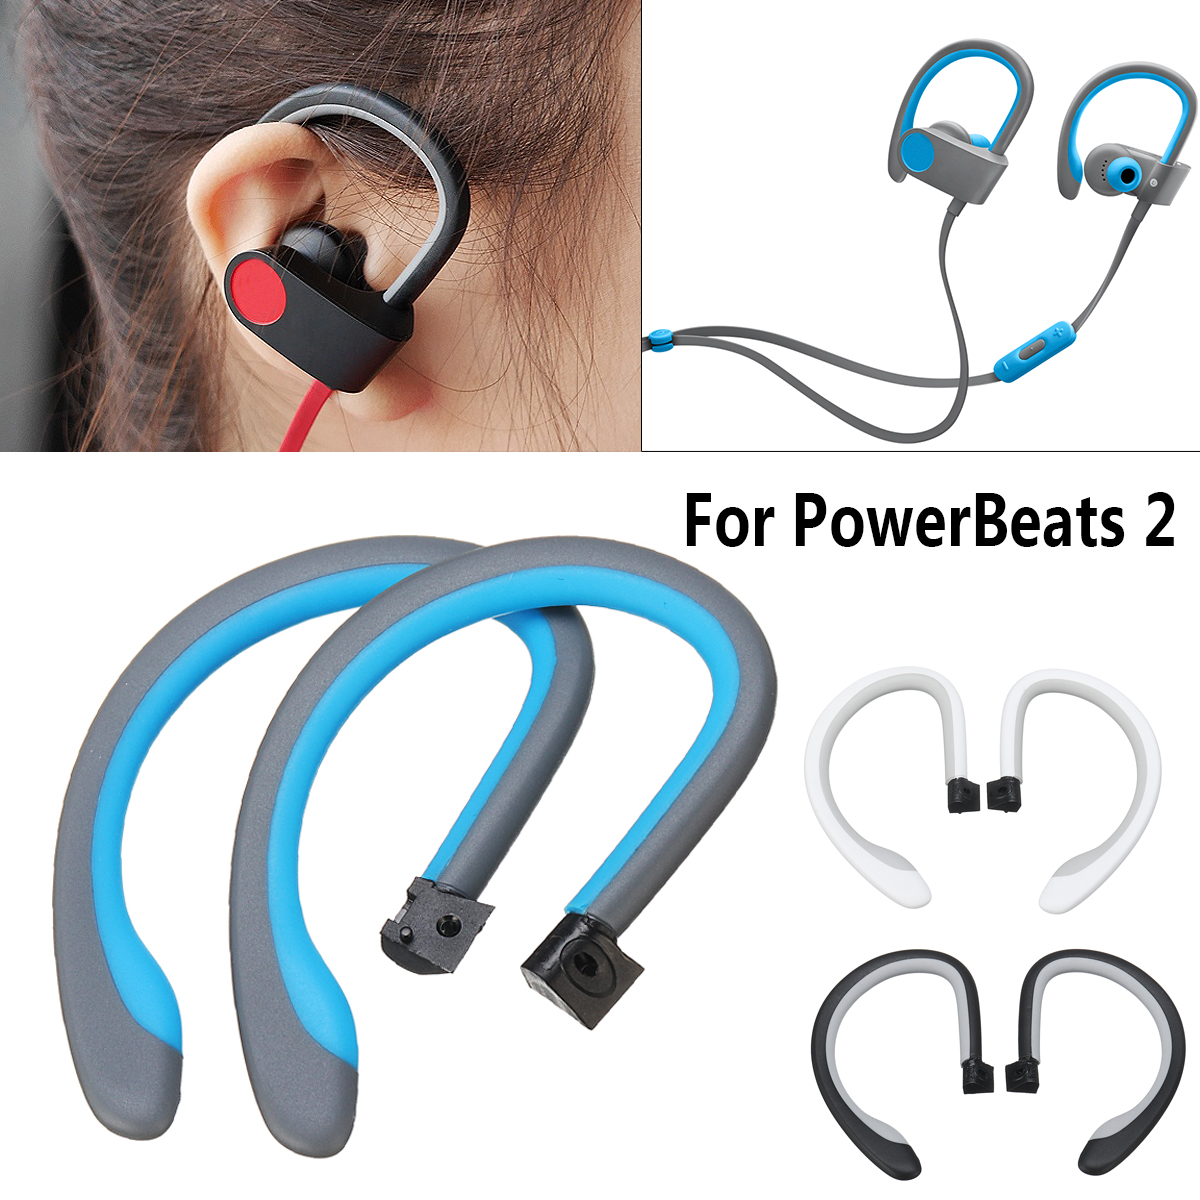 powerbeats replacement ear hook